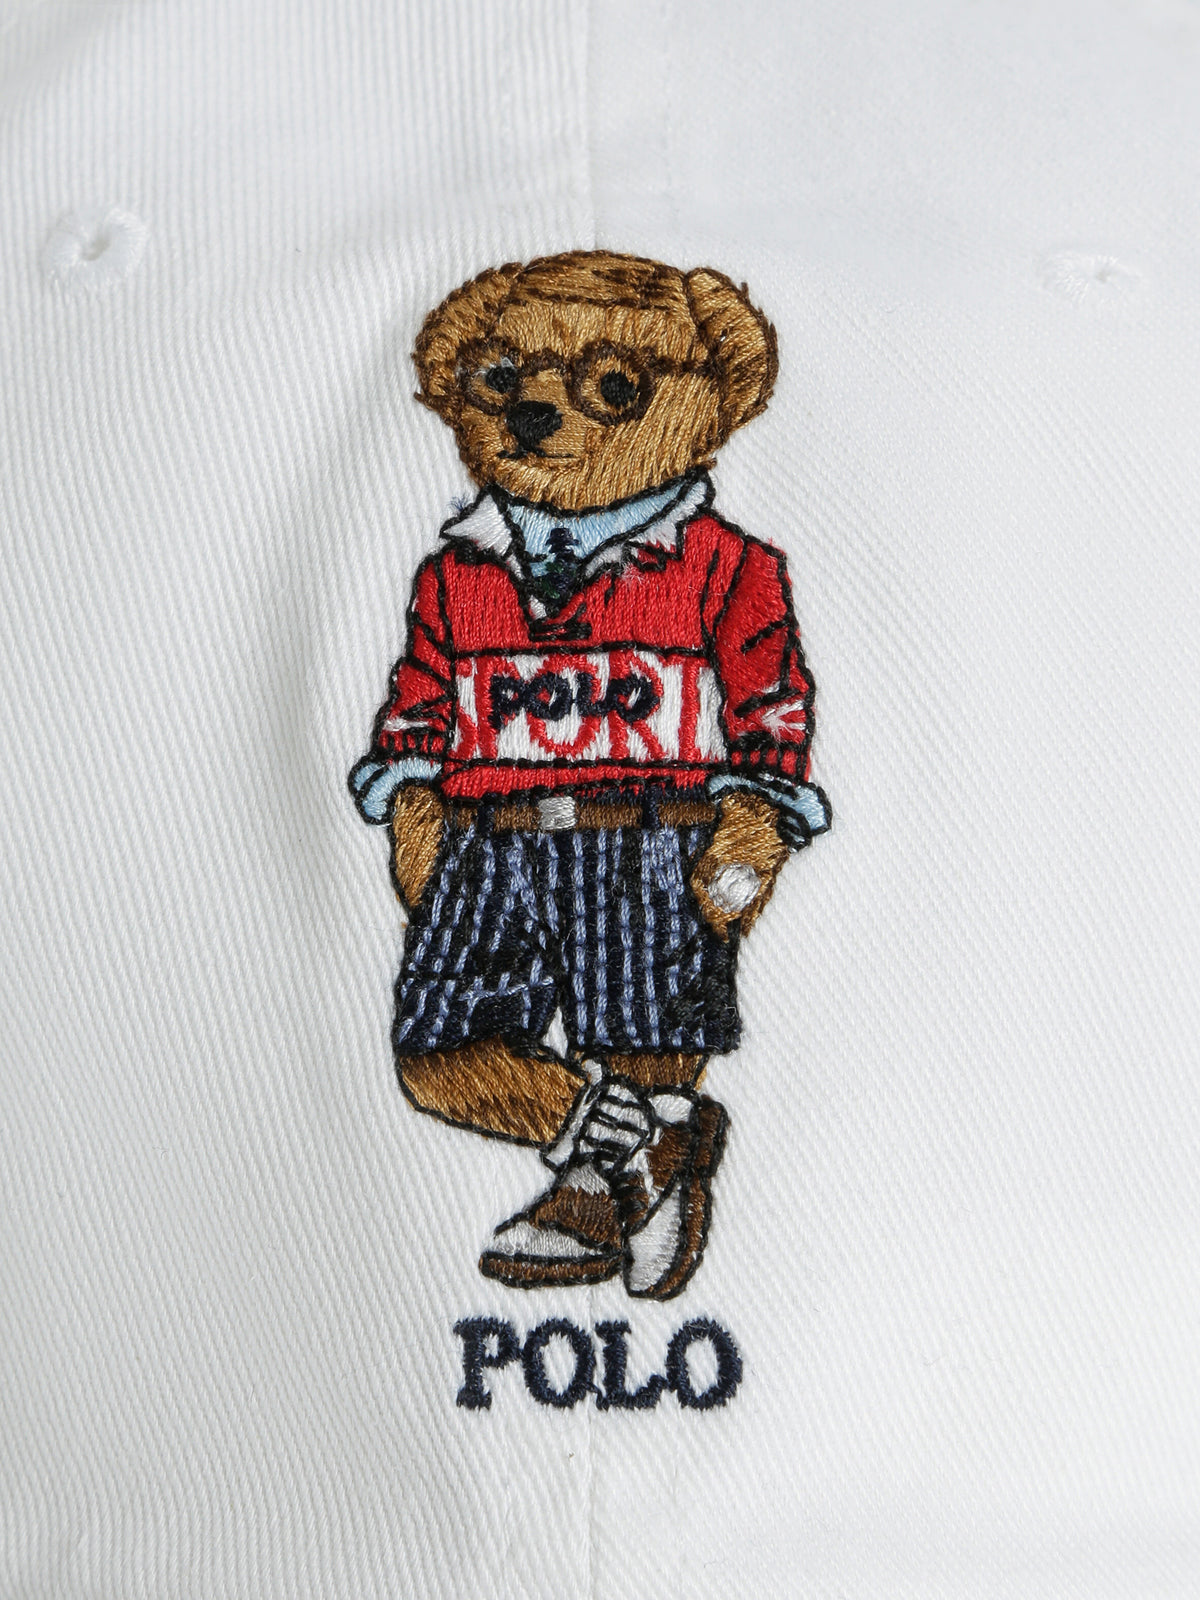 Polo Bear Classic Sport Cap in White